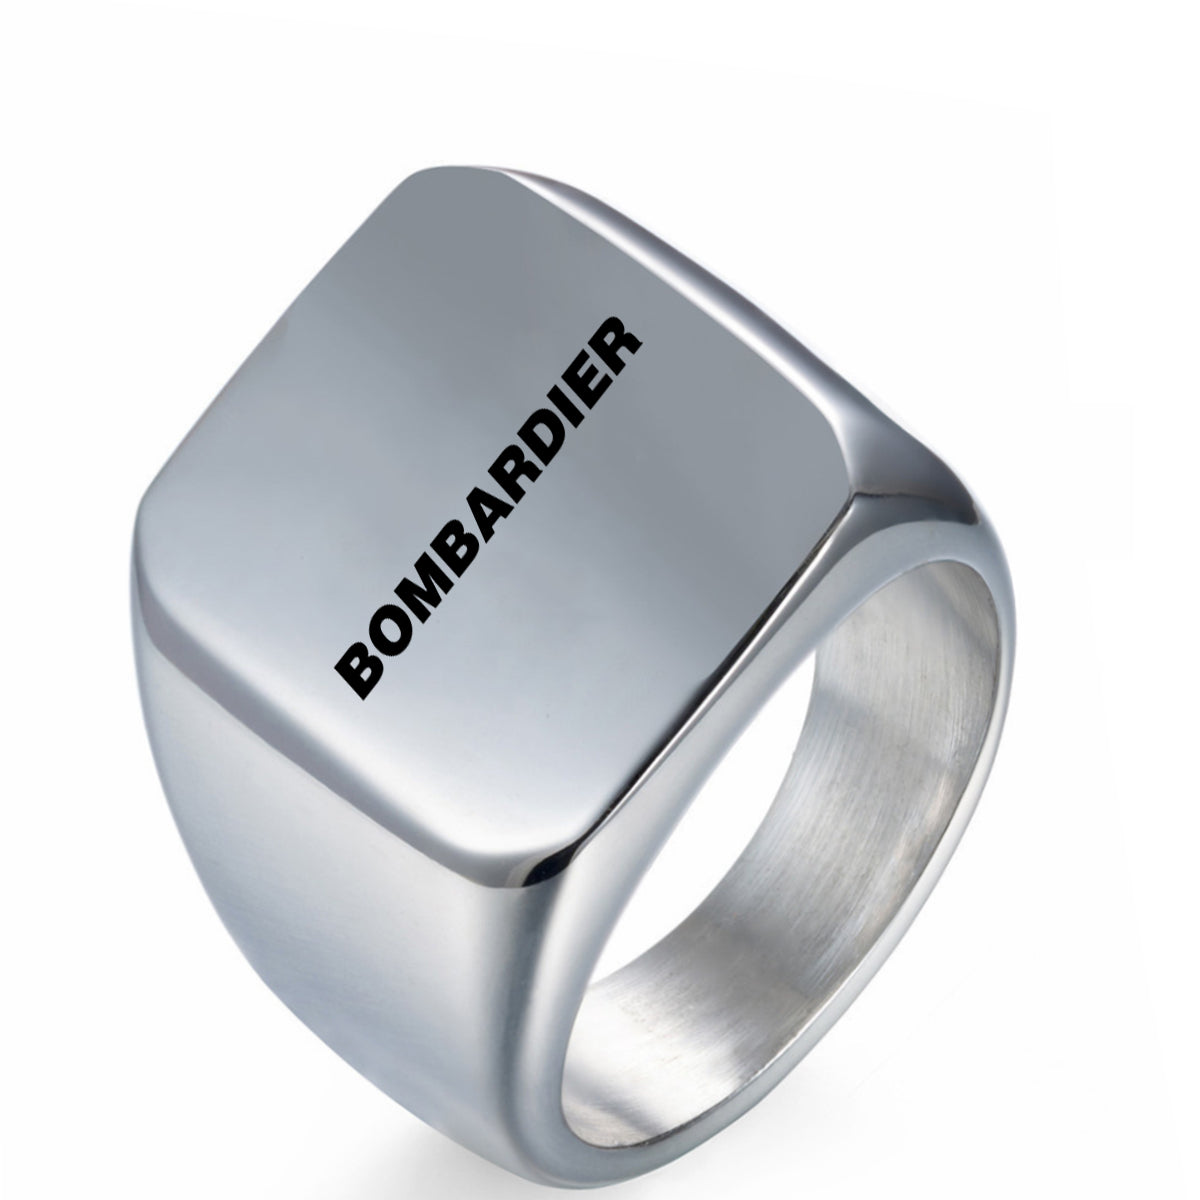 Bombardier & Text Designed Men Rings